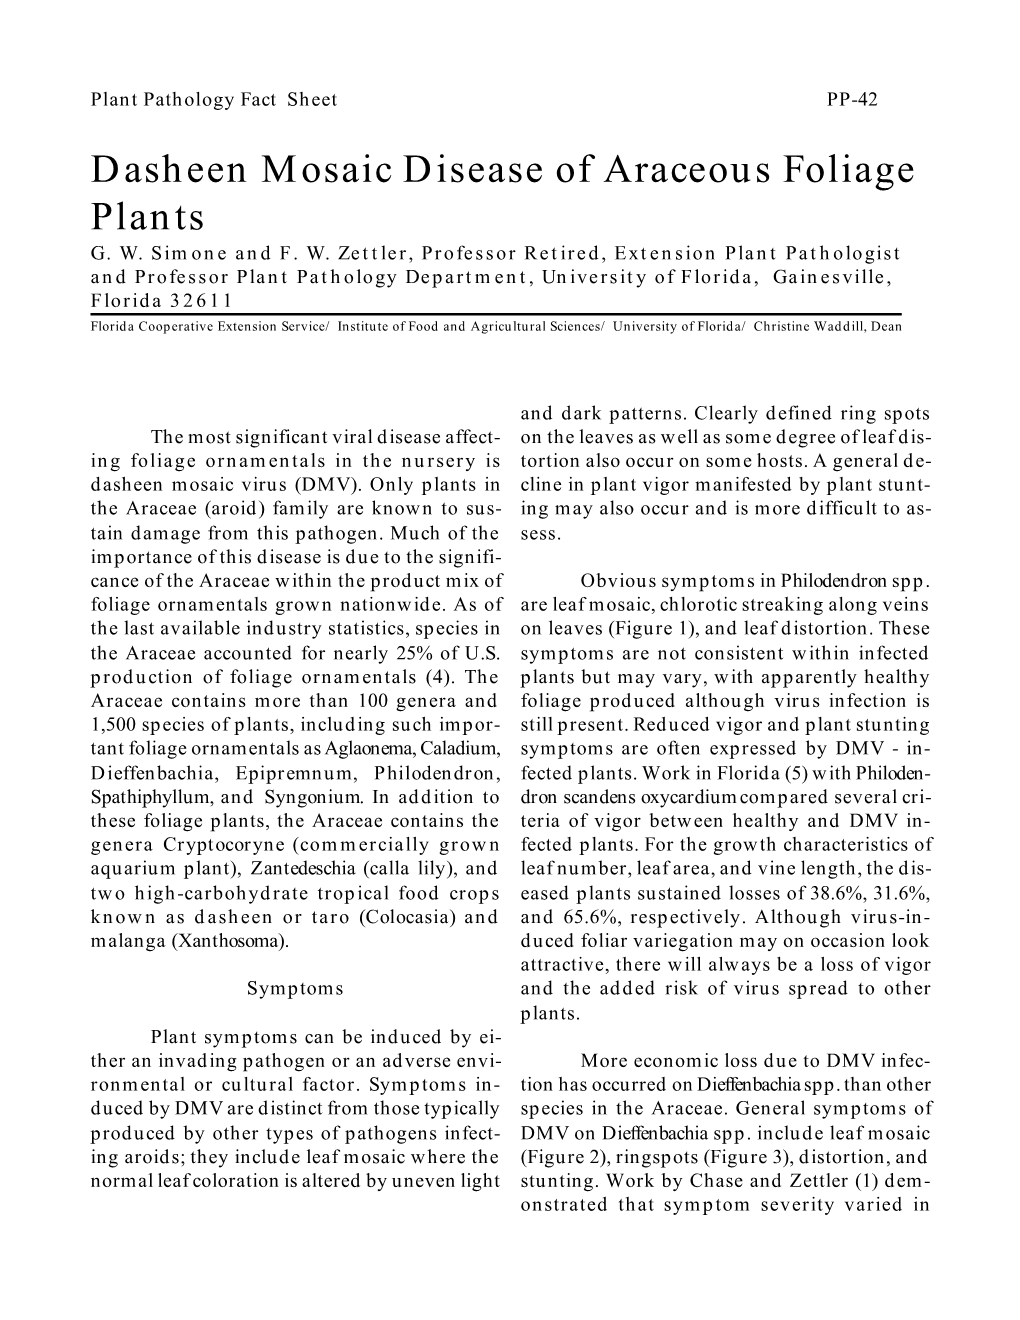 Dasheen Mosaic Disease of Araceous Foliage Plants G